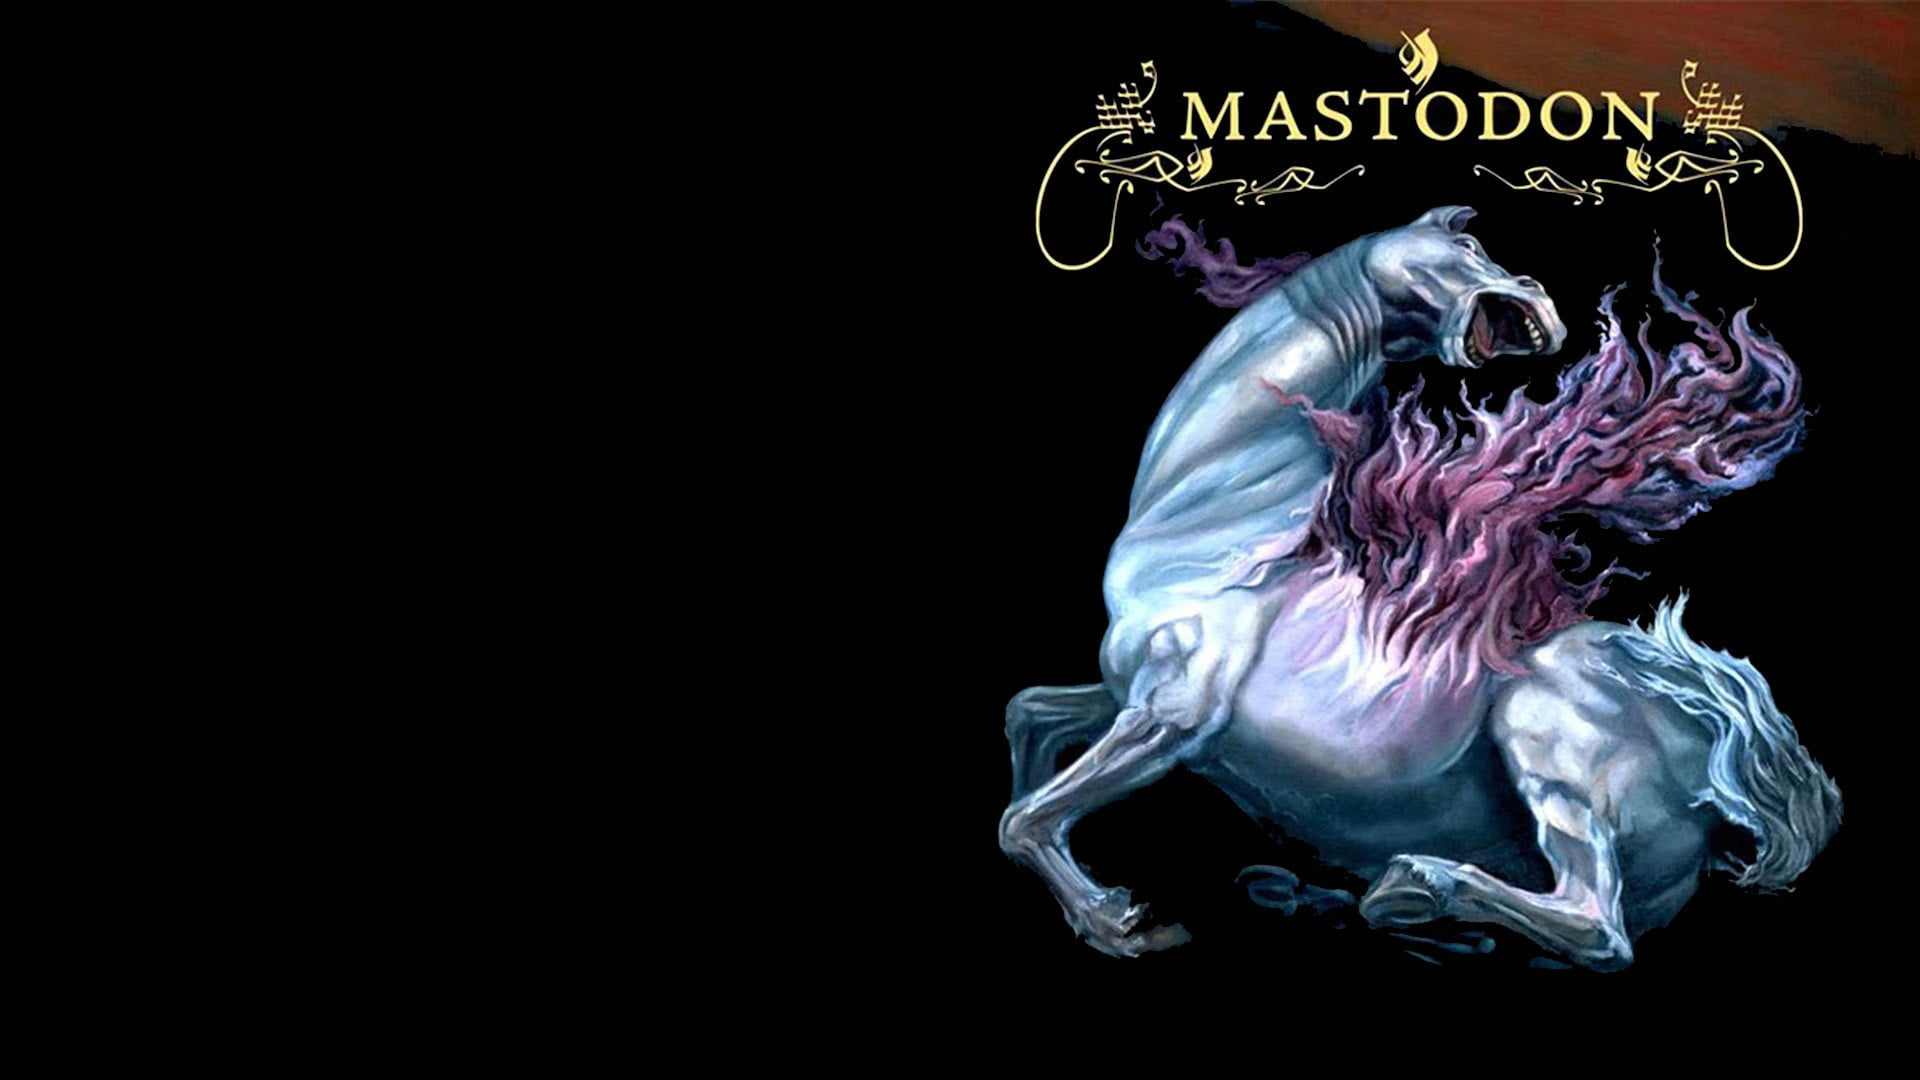 Mastodon logo, fantasy art, studio shot, black background, copy space